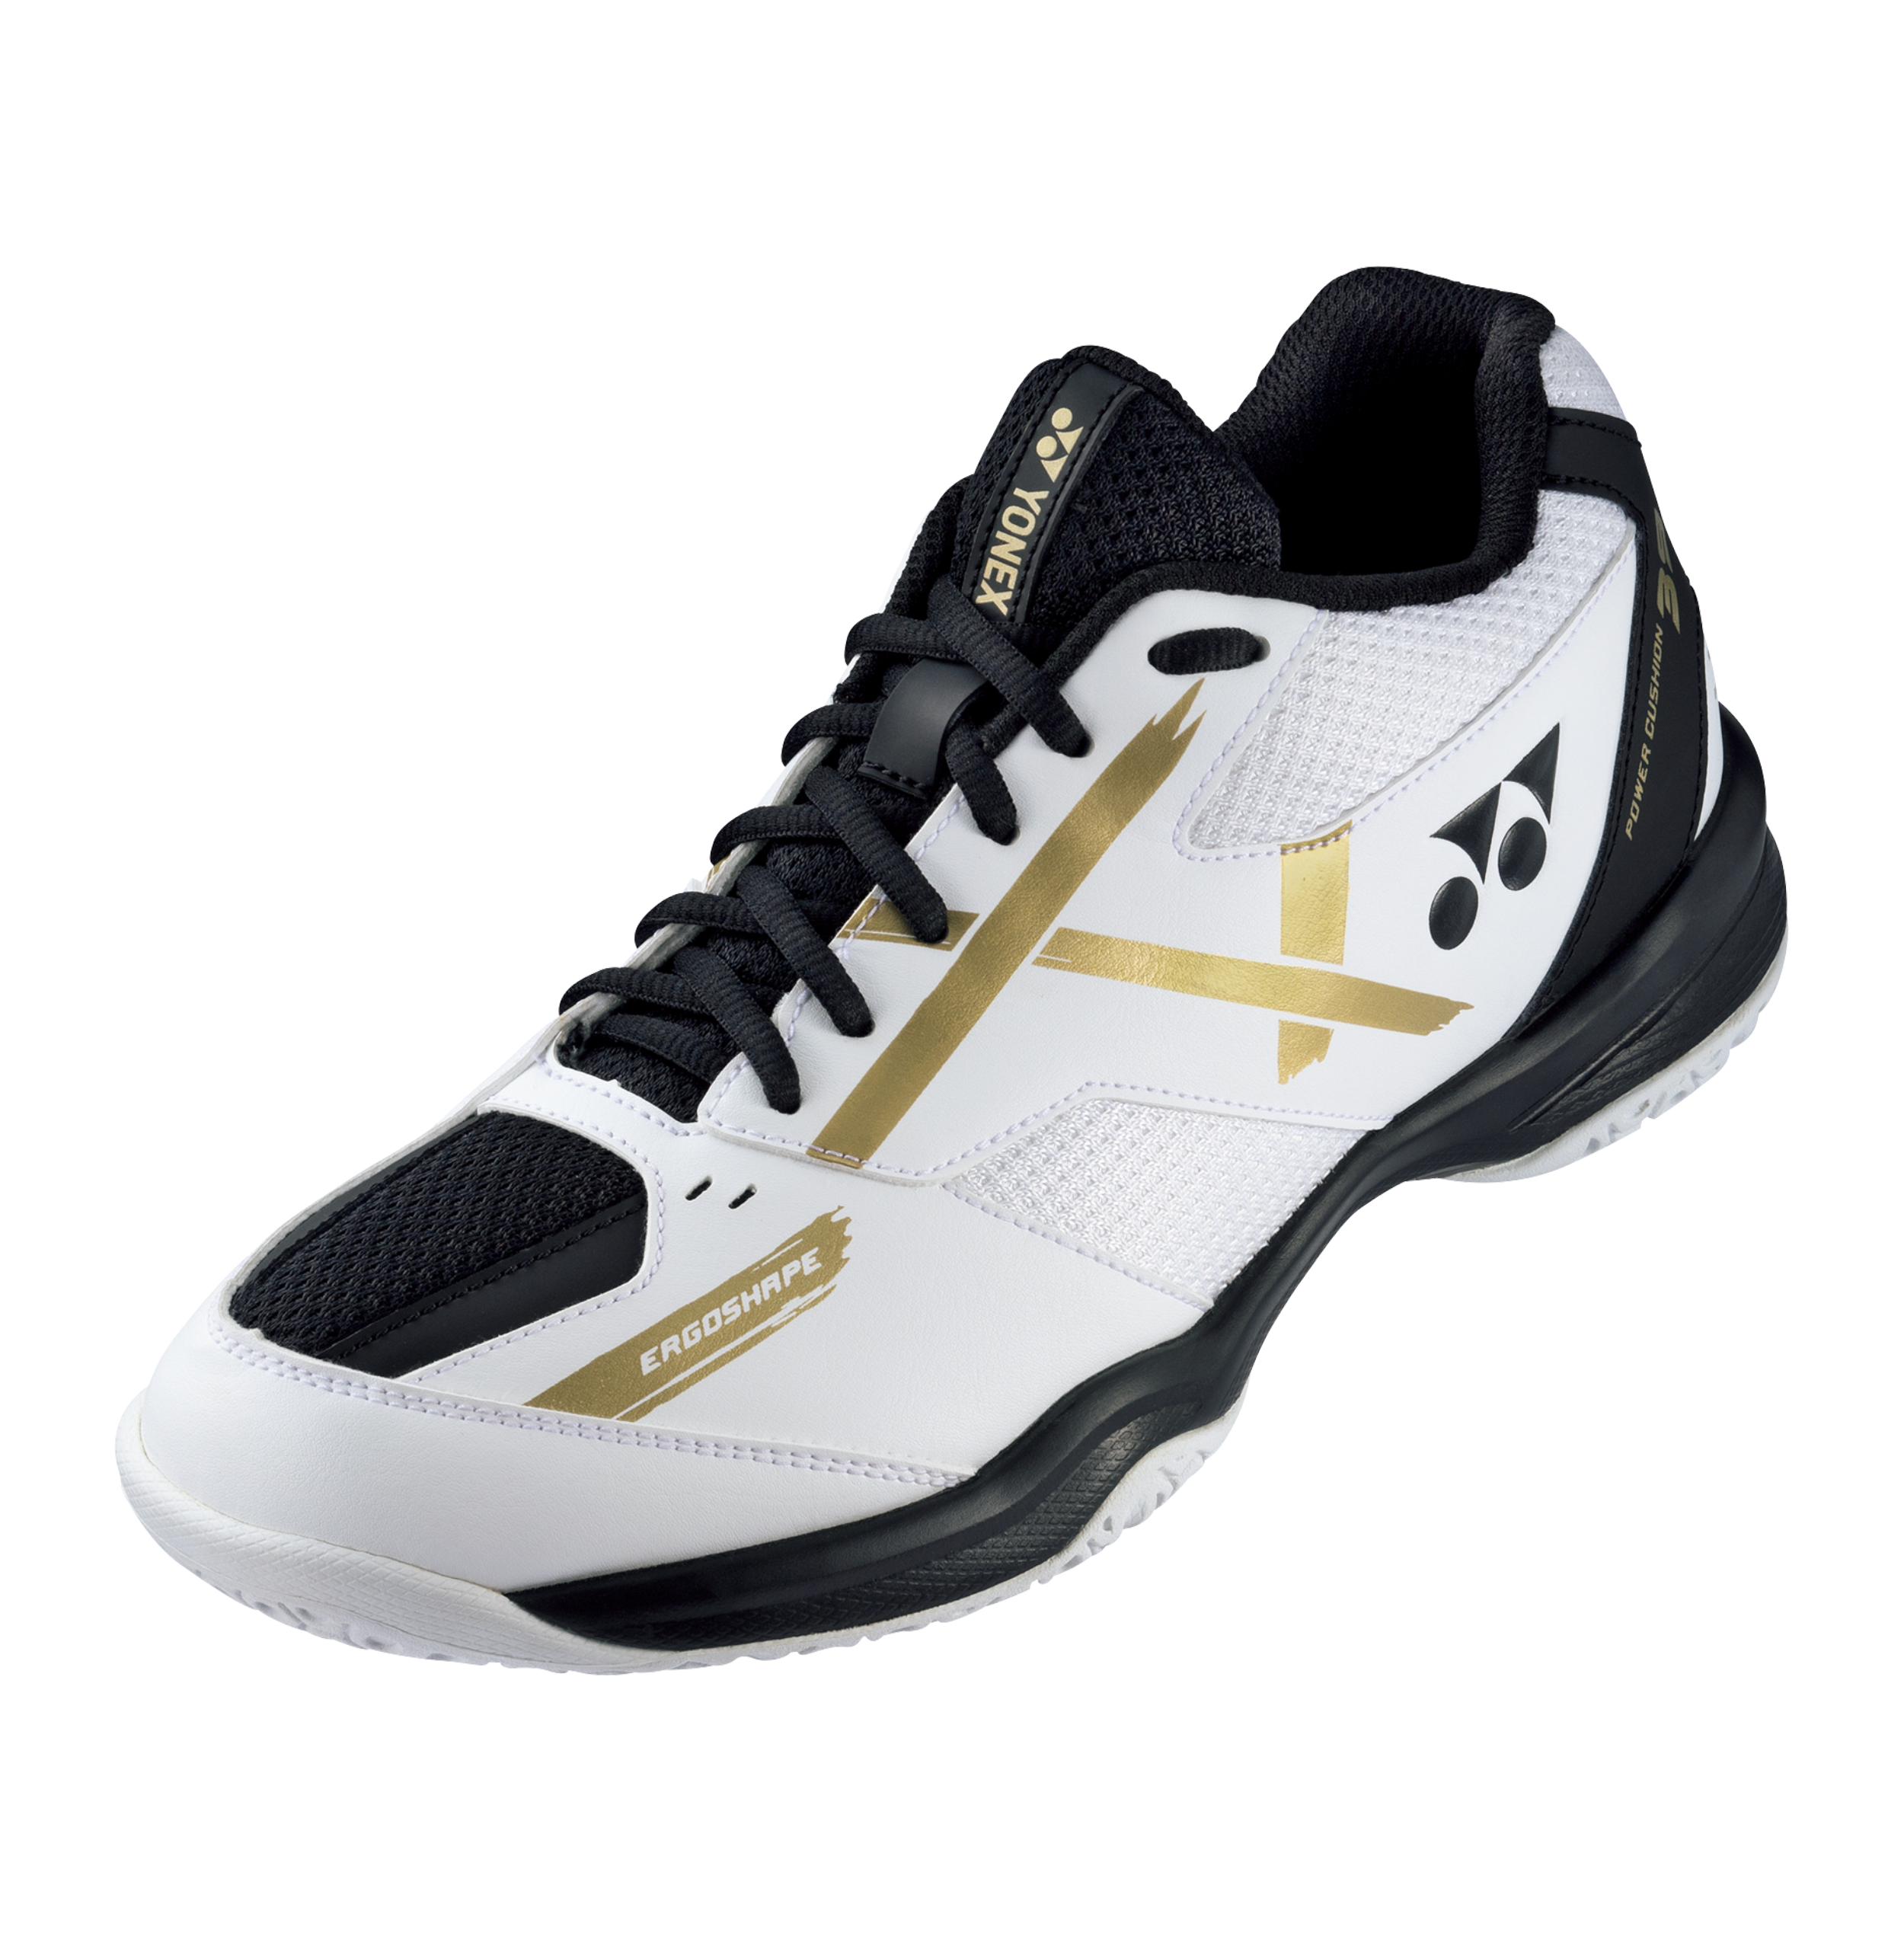 Yonex badminton shoes POWER CUSHION 39 WIDE UNISEX - SHB39WEX - White / Gold